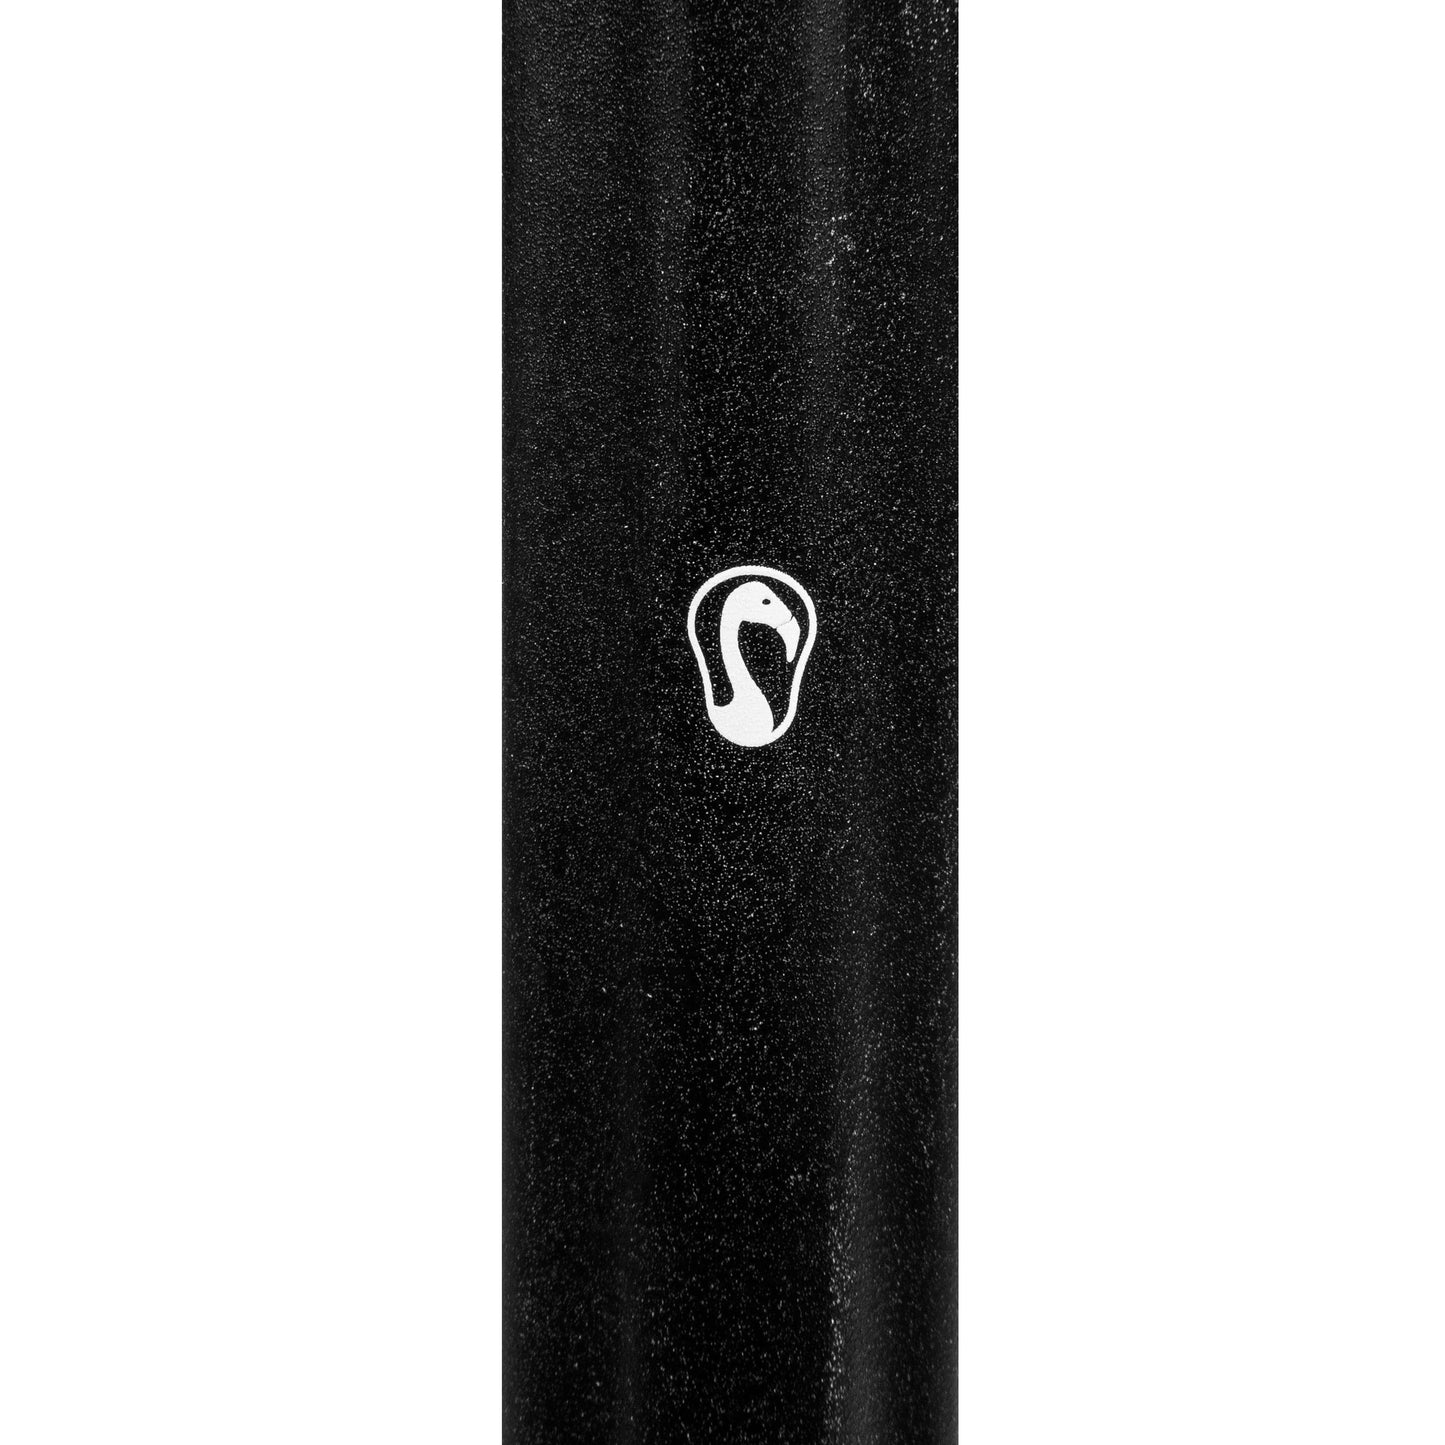 Signature Pro Carbon Shaft | 30" | Black Signature Lacrosse